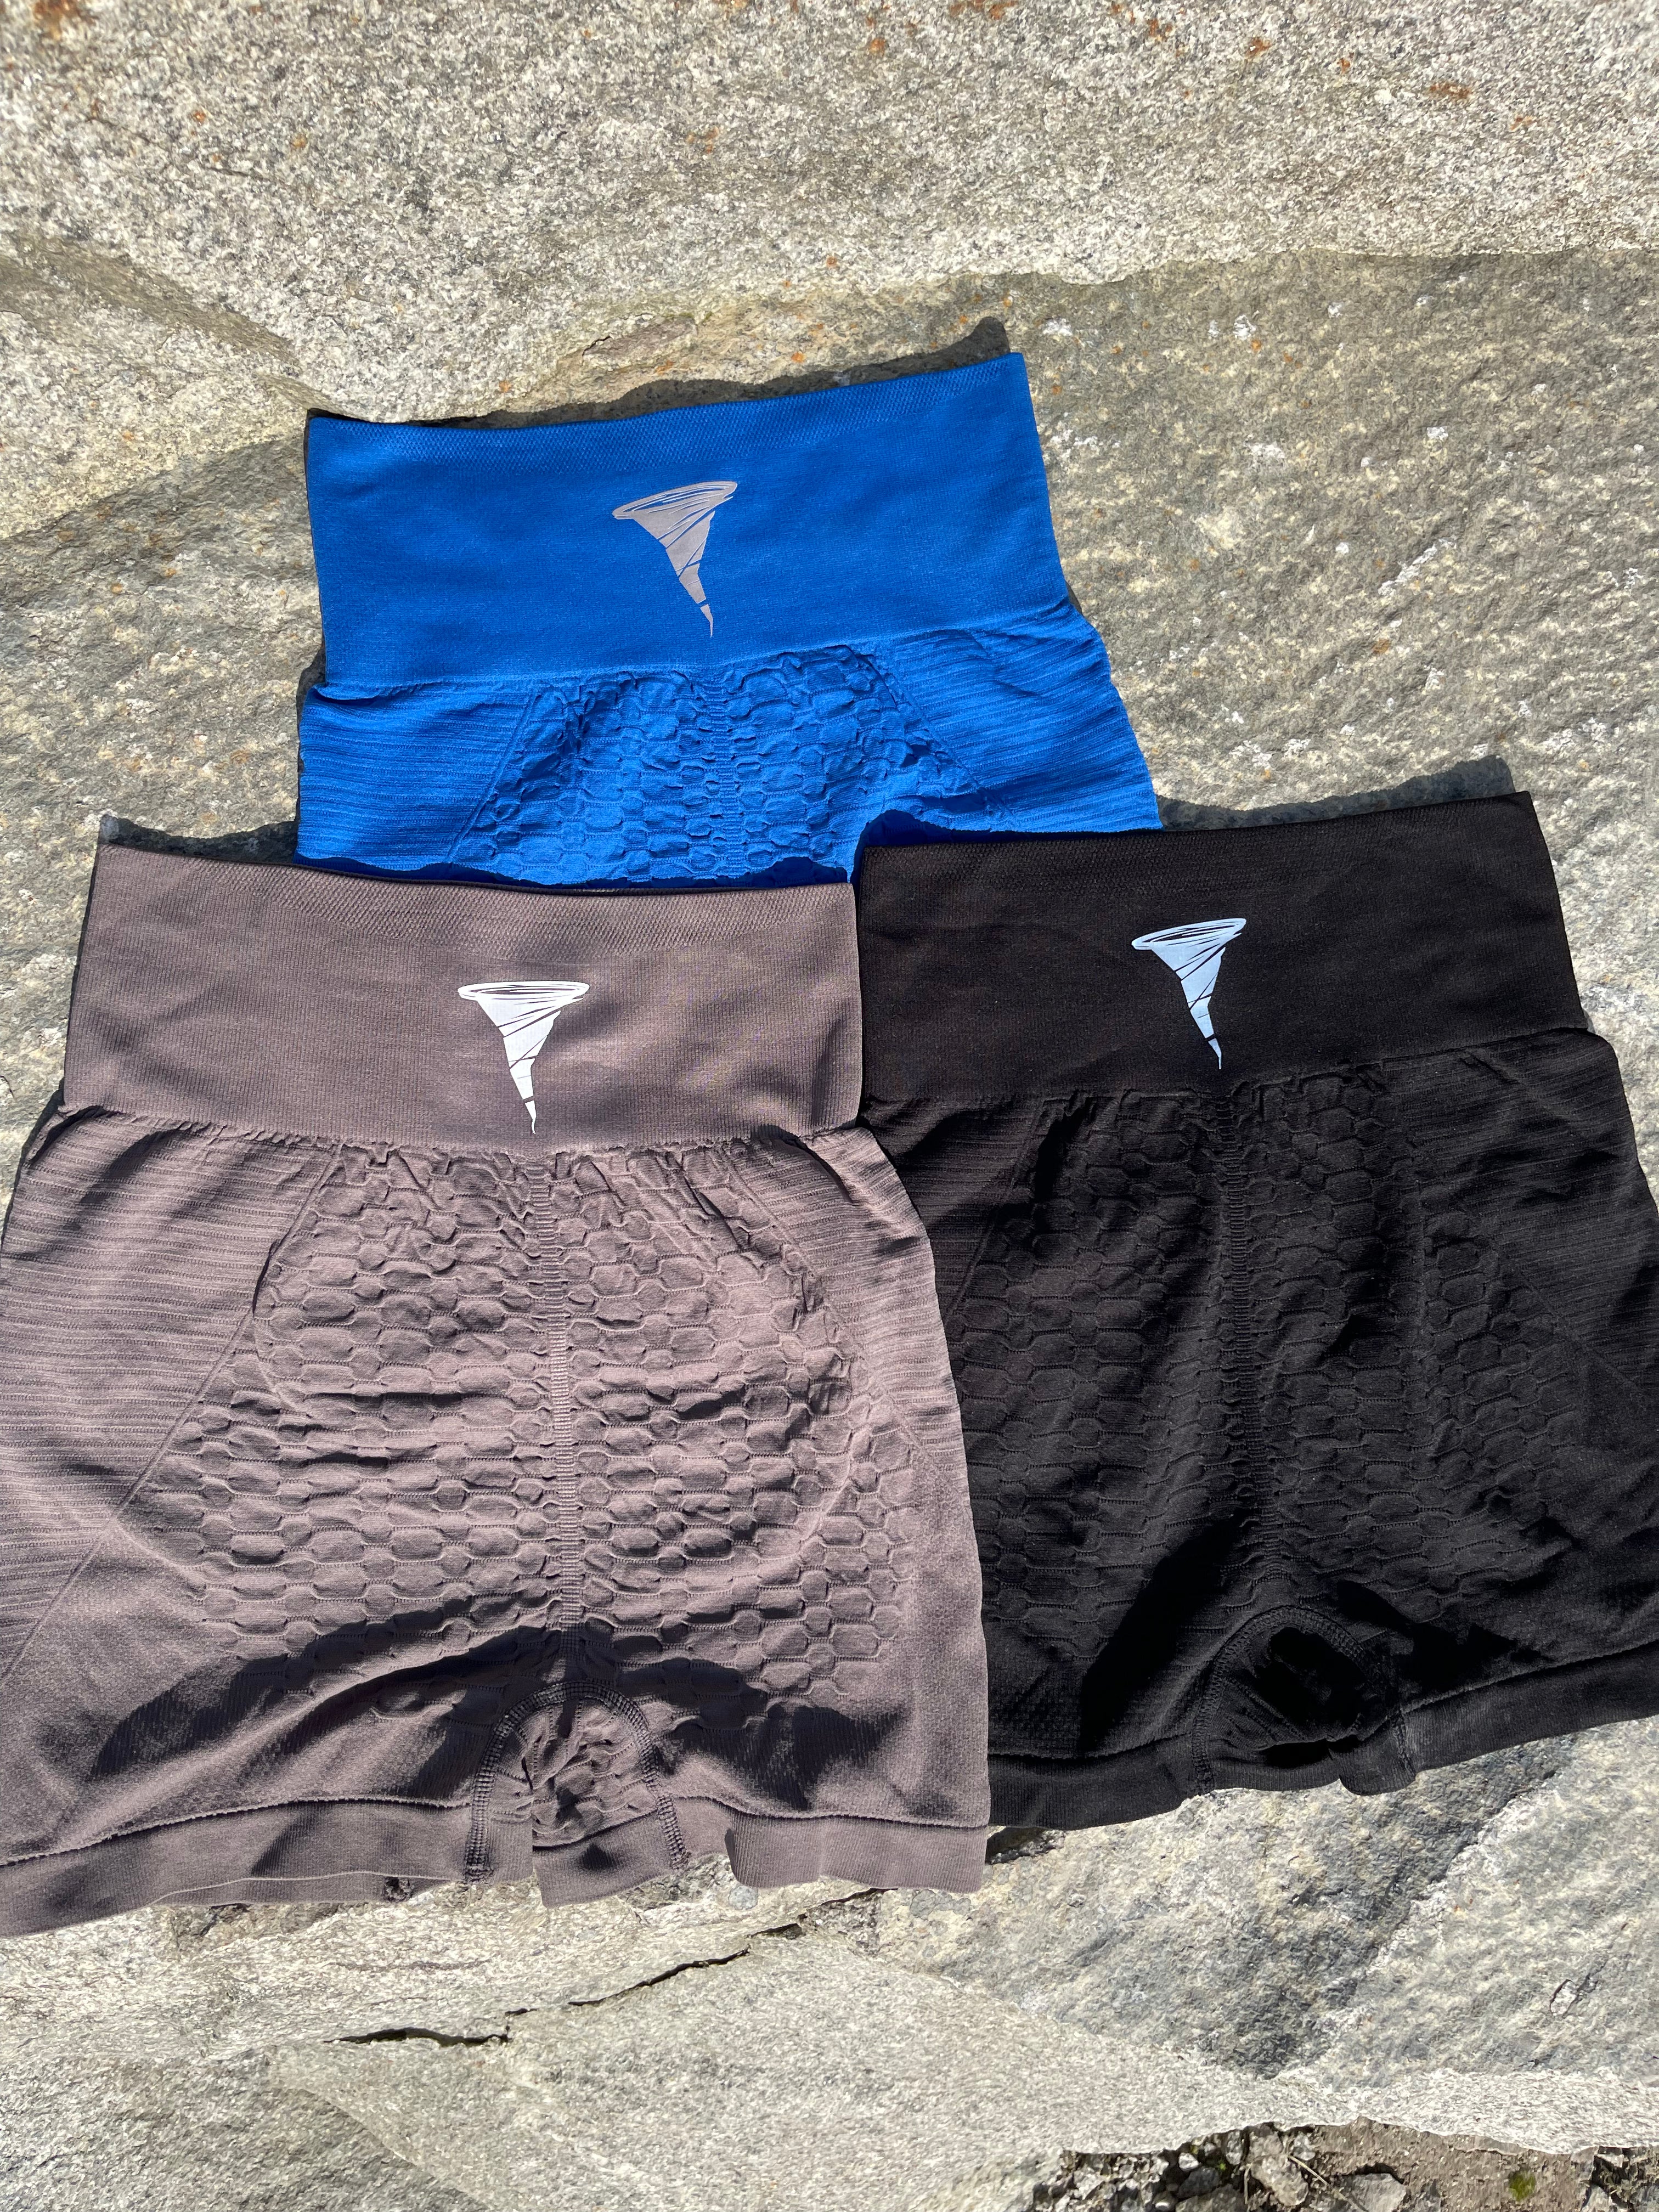 Project Zero fitness shorts bundle.